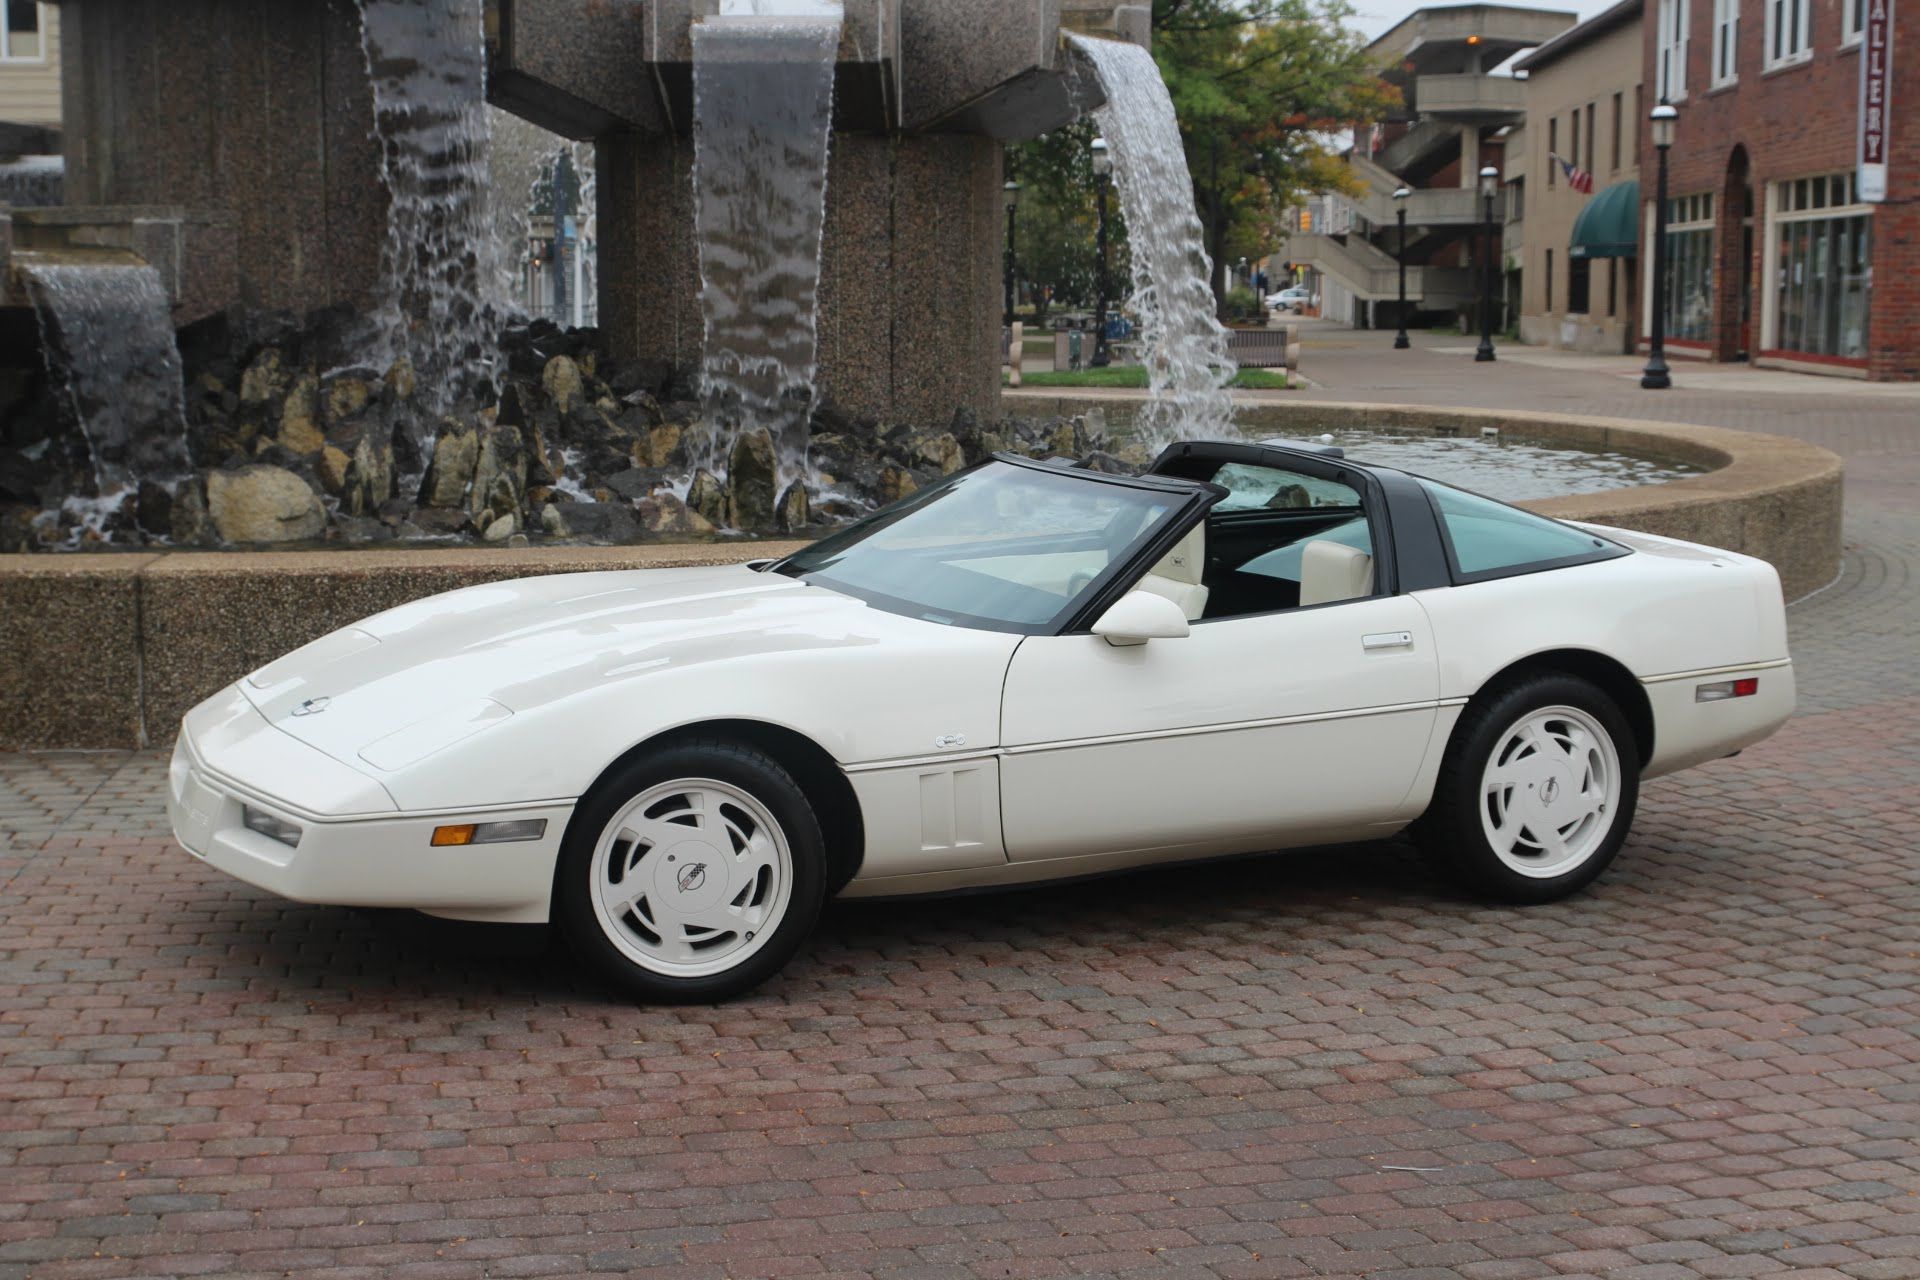 White 1988 Corvette Commemorative Edition Parked Outside